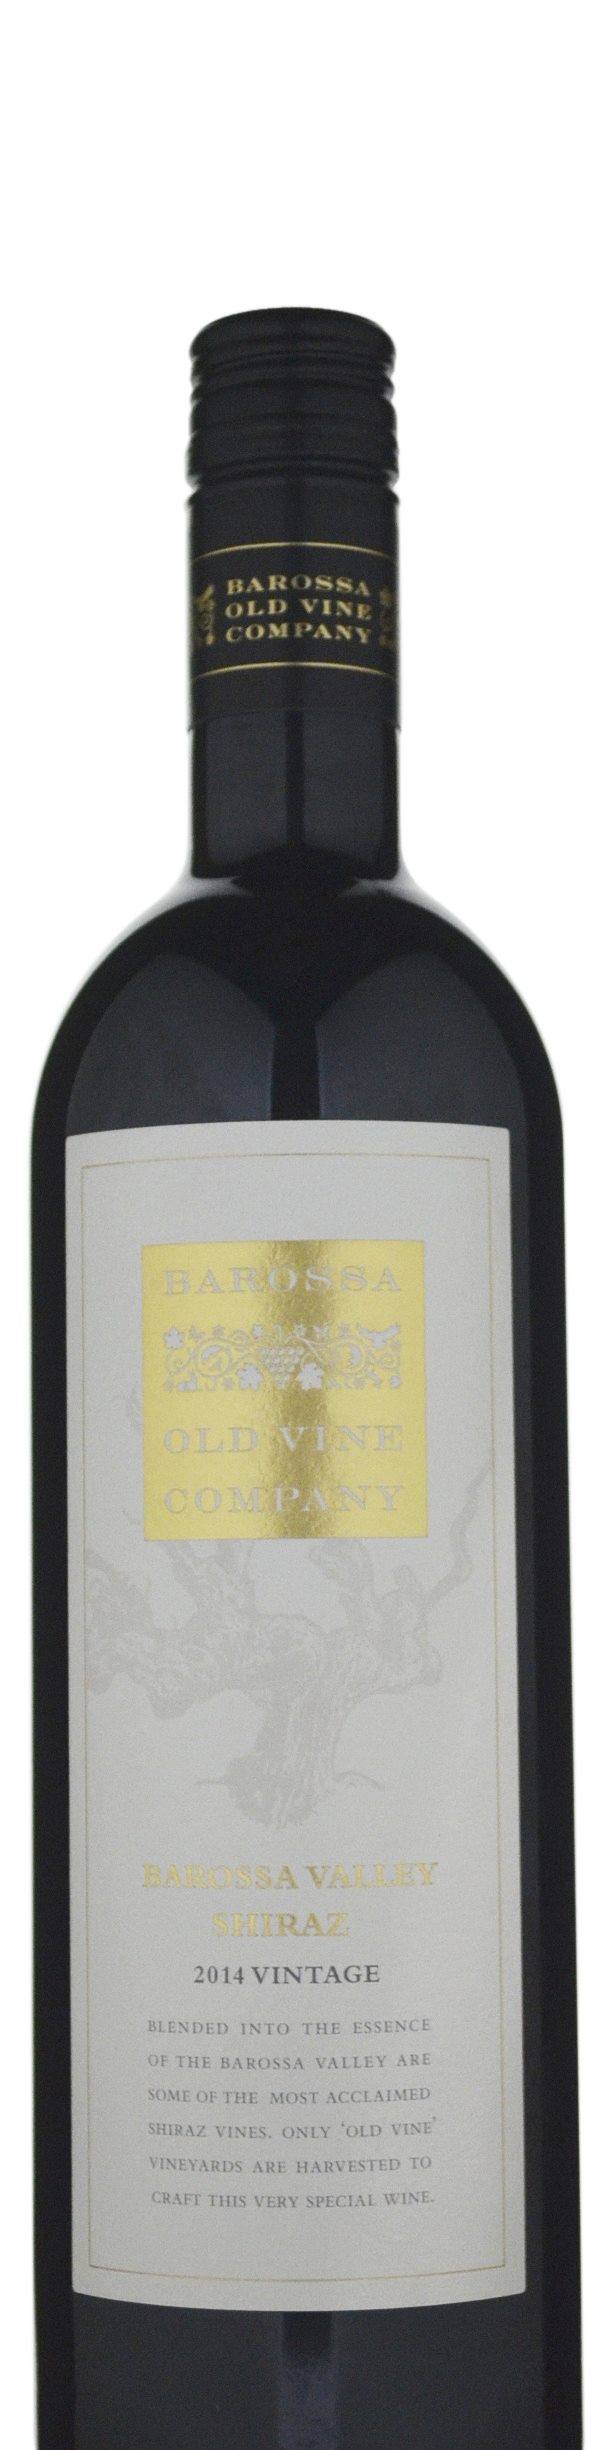 Barossa Old Vine Company Shiraz 2014